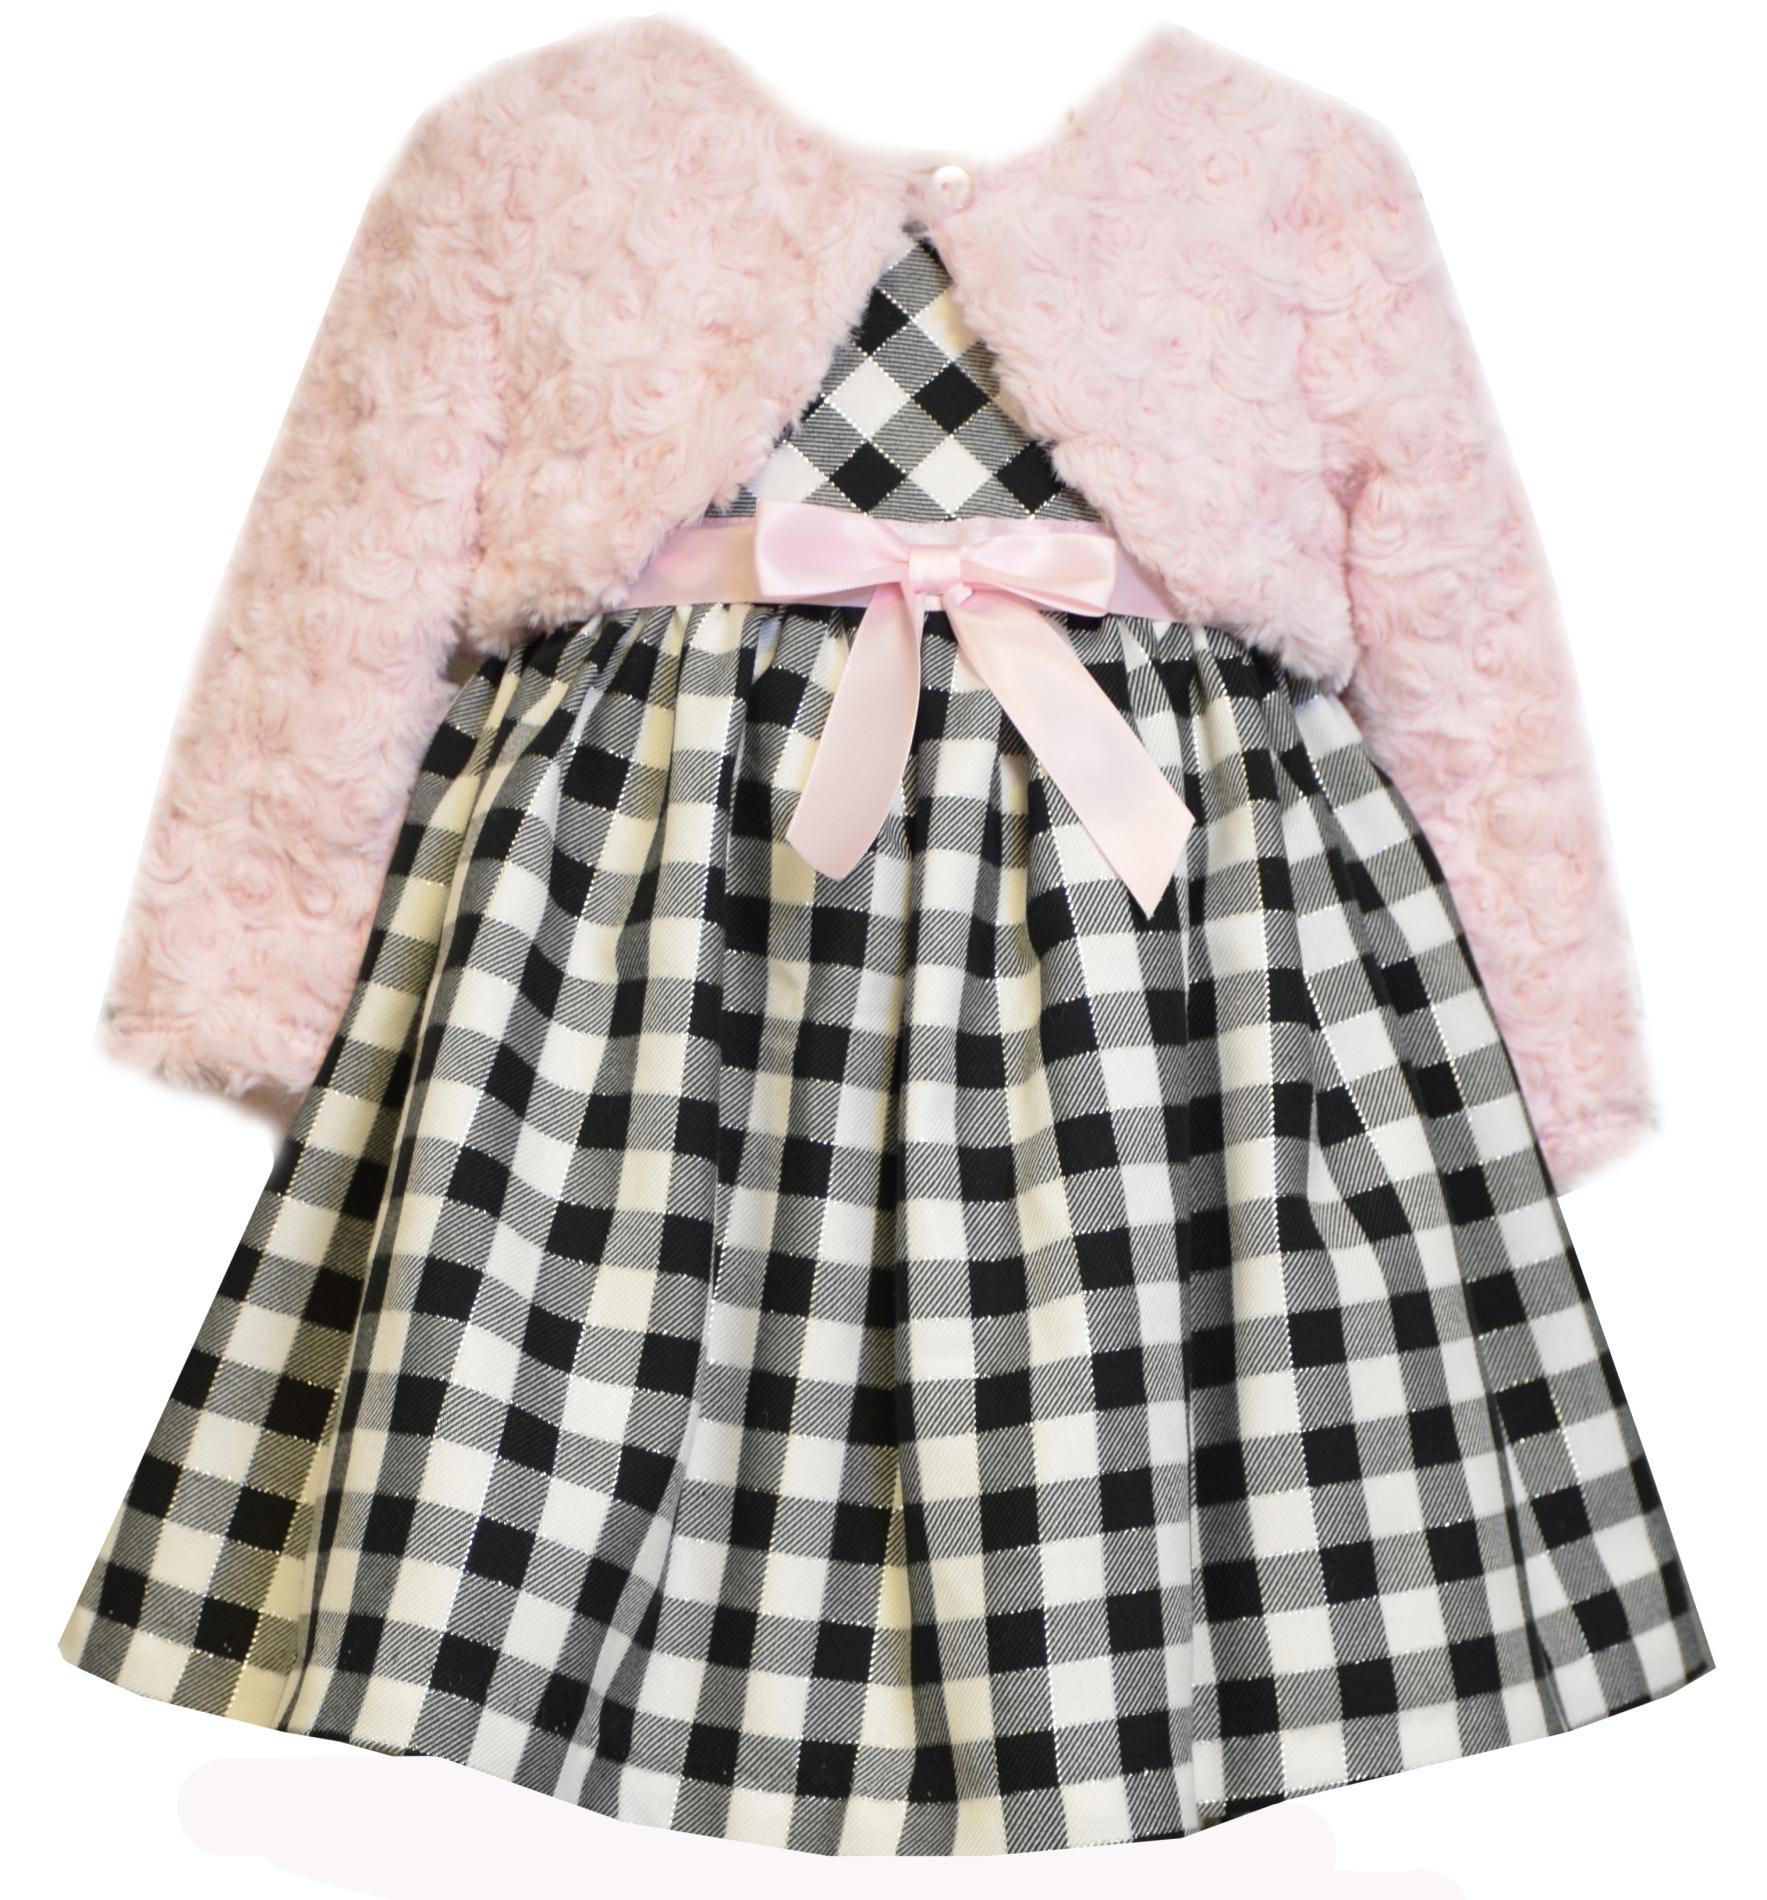 Ashley Ann Infant & Toddler Girl's Dress & Faux Fur Jacket - Plaid